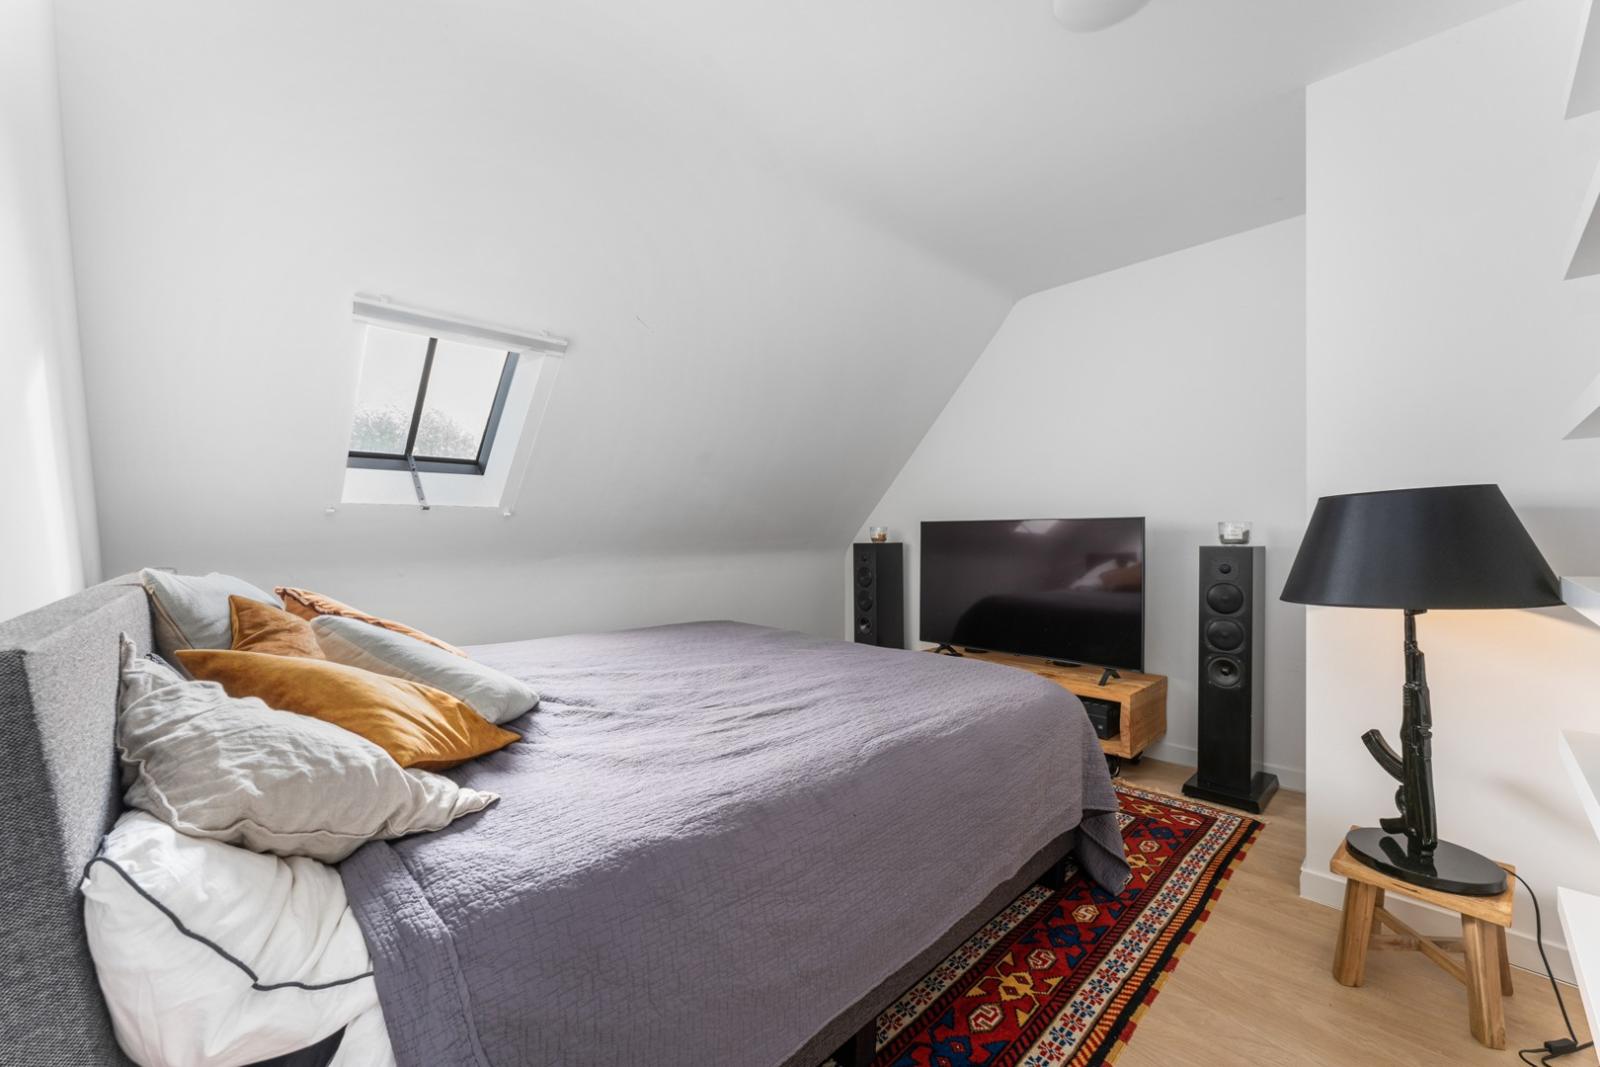 Gerenoveerde woning met 3 slaapkamers op een unieke locatie te Oostkamp!